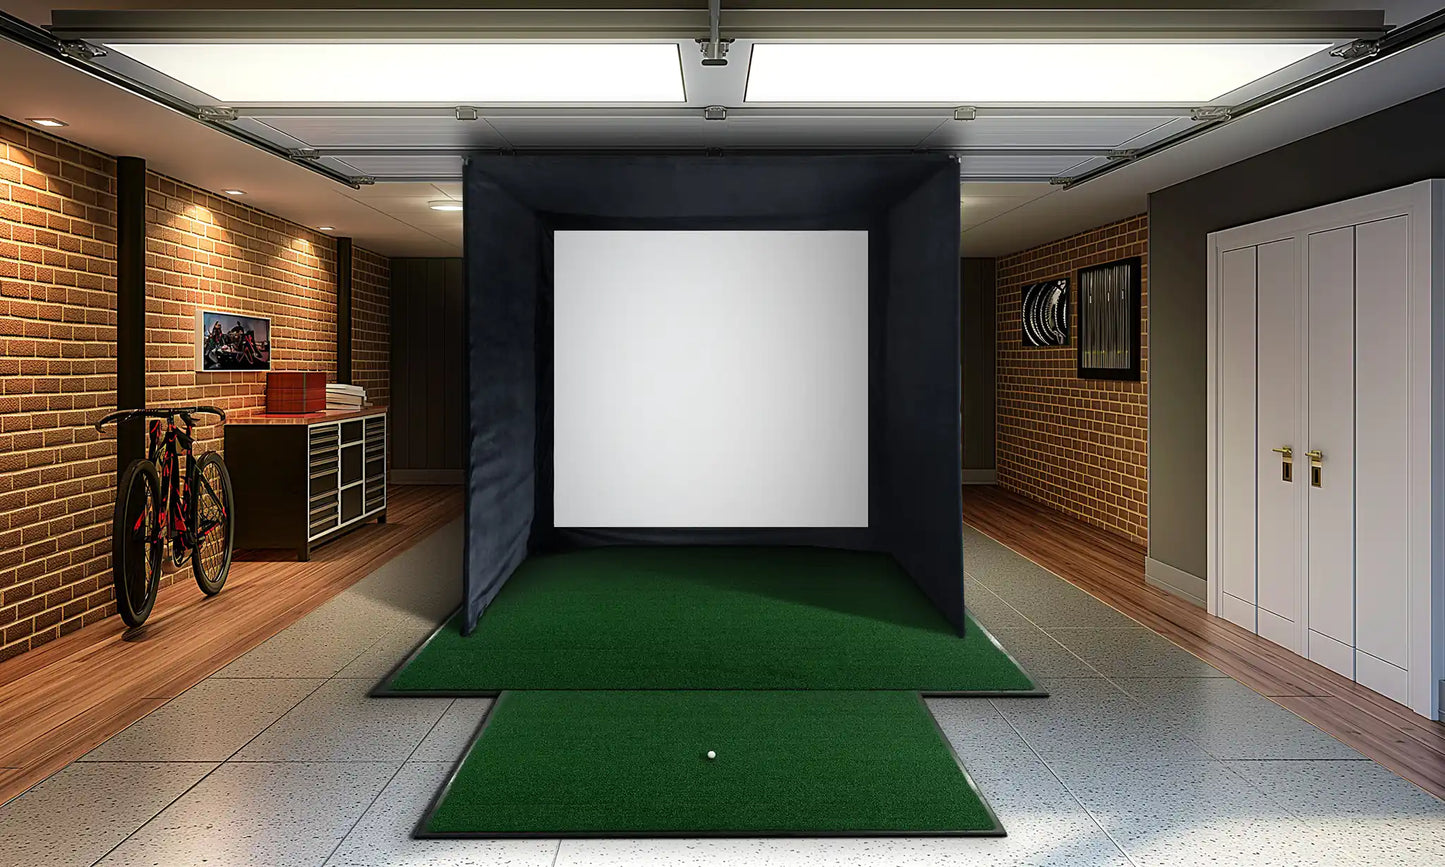 SimSpace golf enclosure in a garage setting